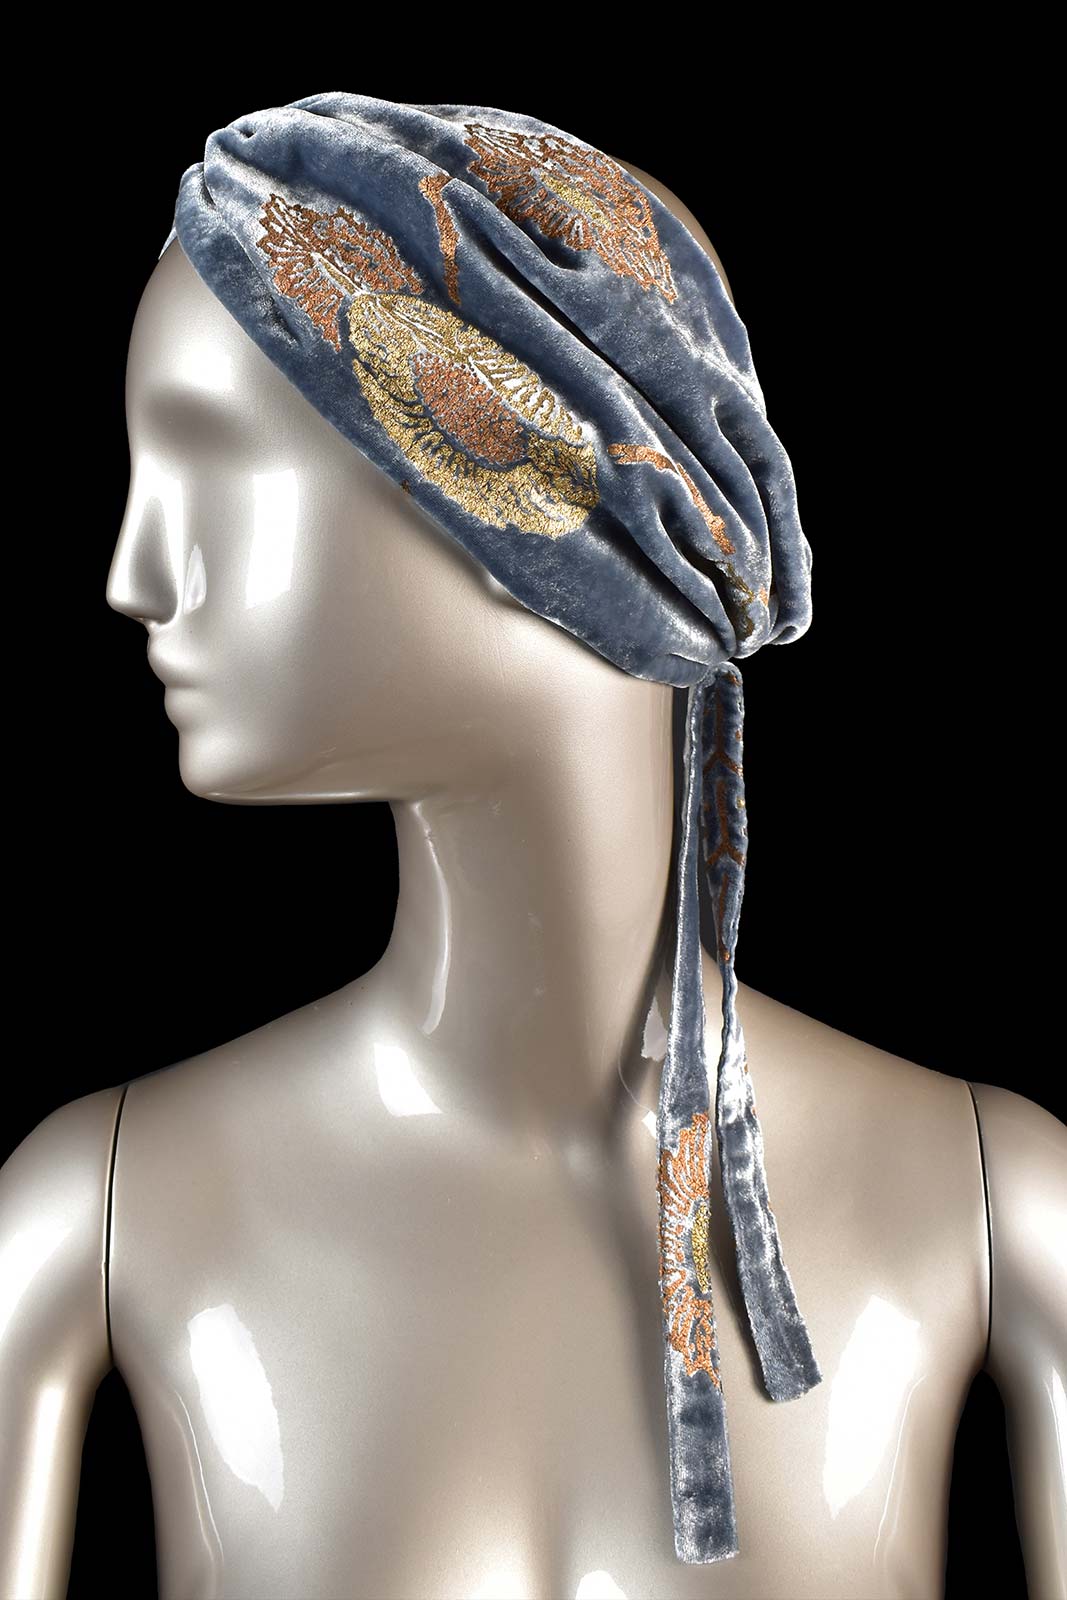 Braided headband/turban for your next owanbe! - Tribune Online